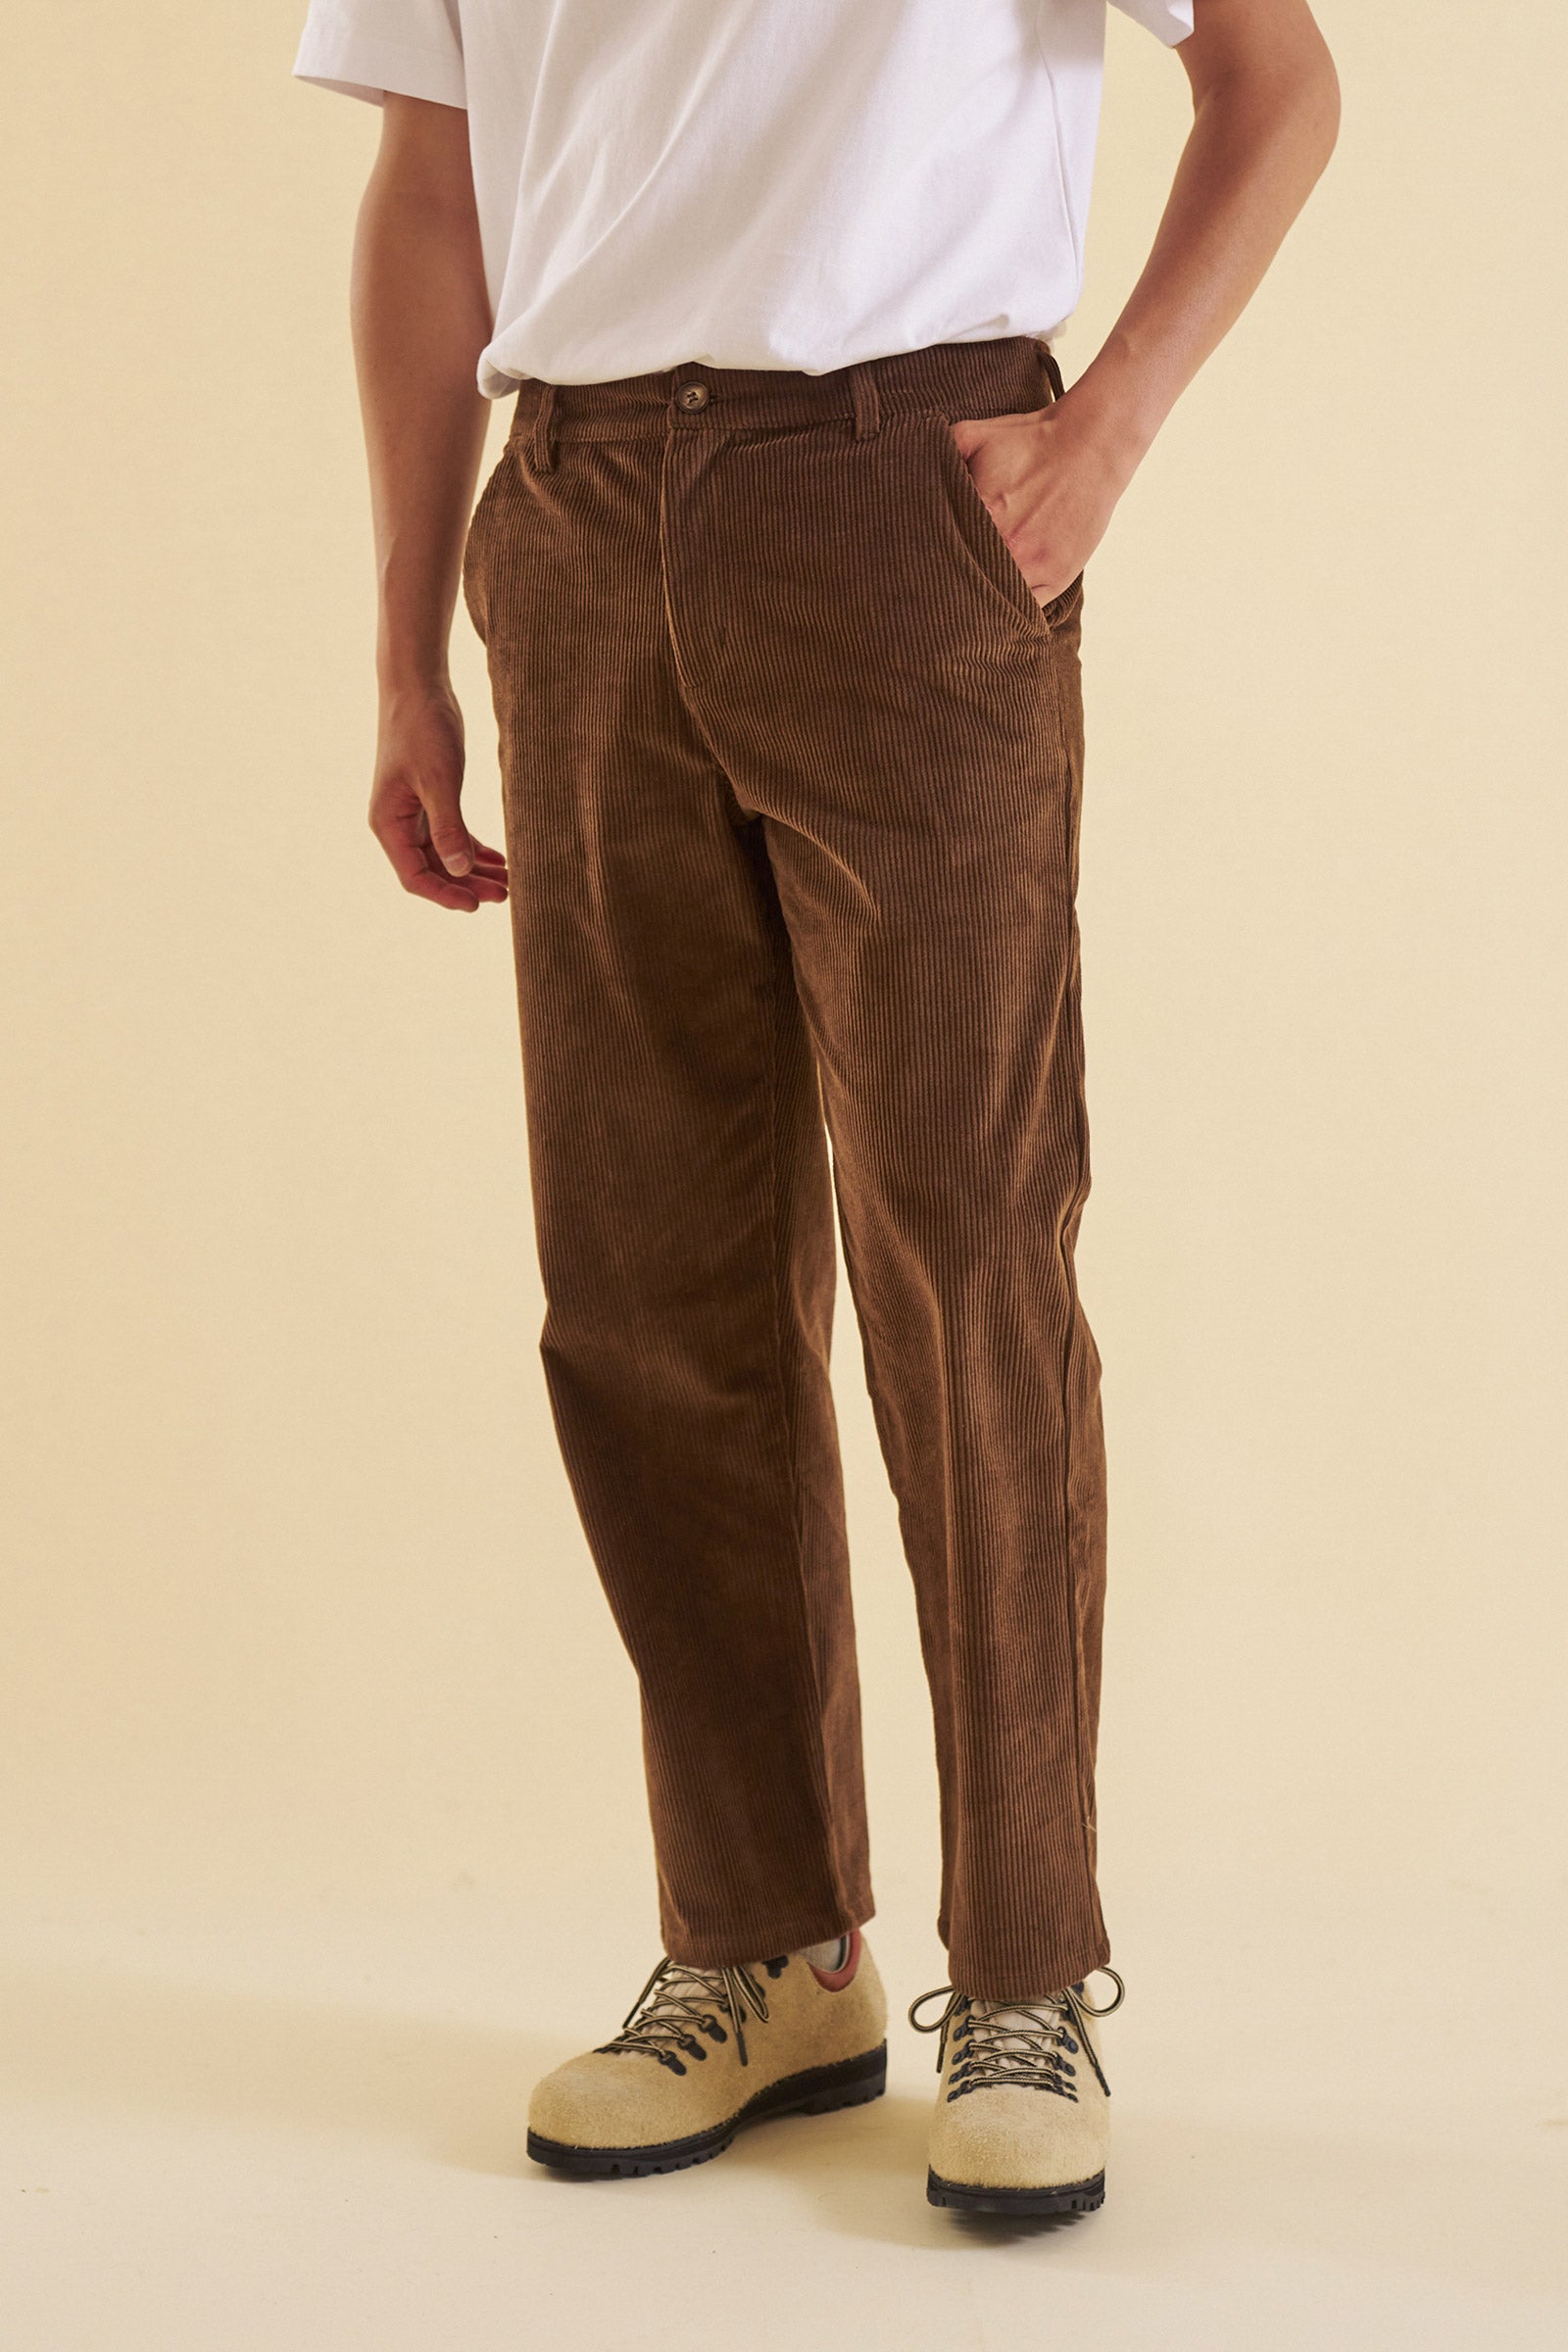 Mens Corduroy Pants - Buy Cream Colored Corduroy Pants